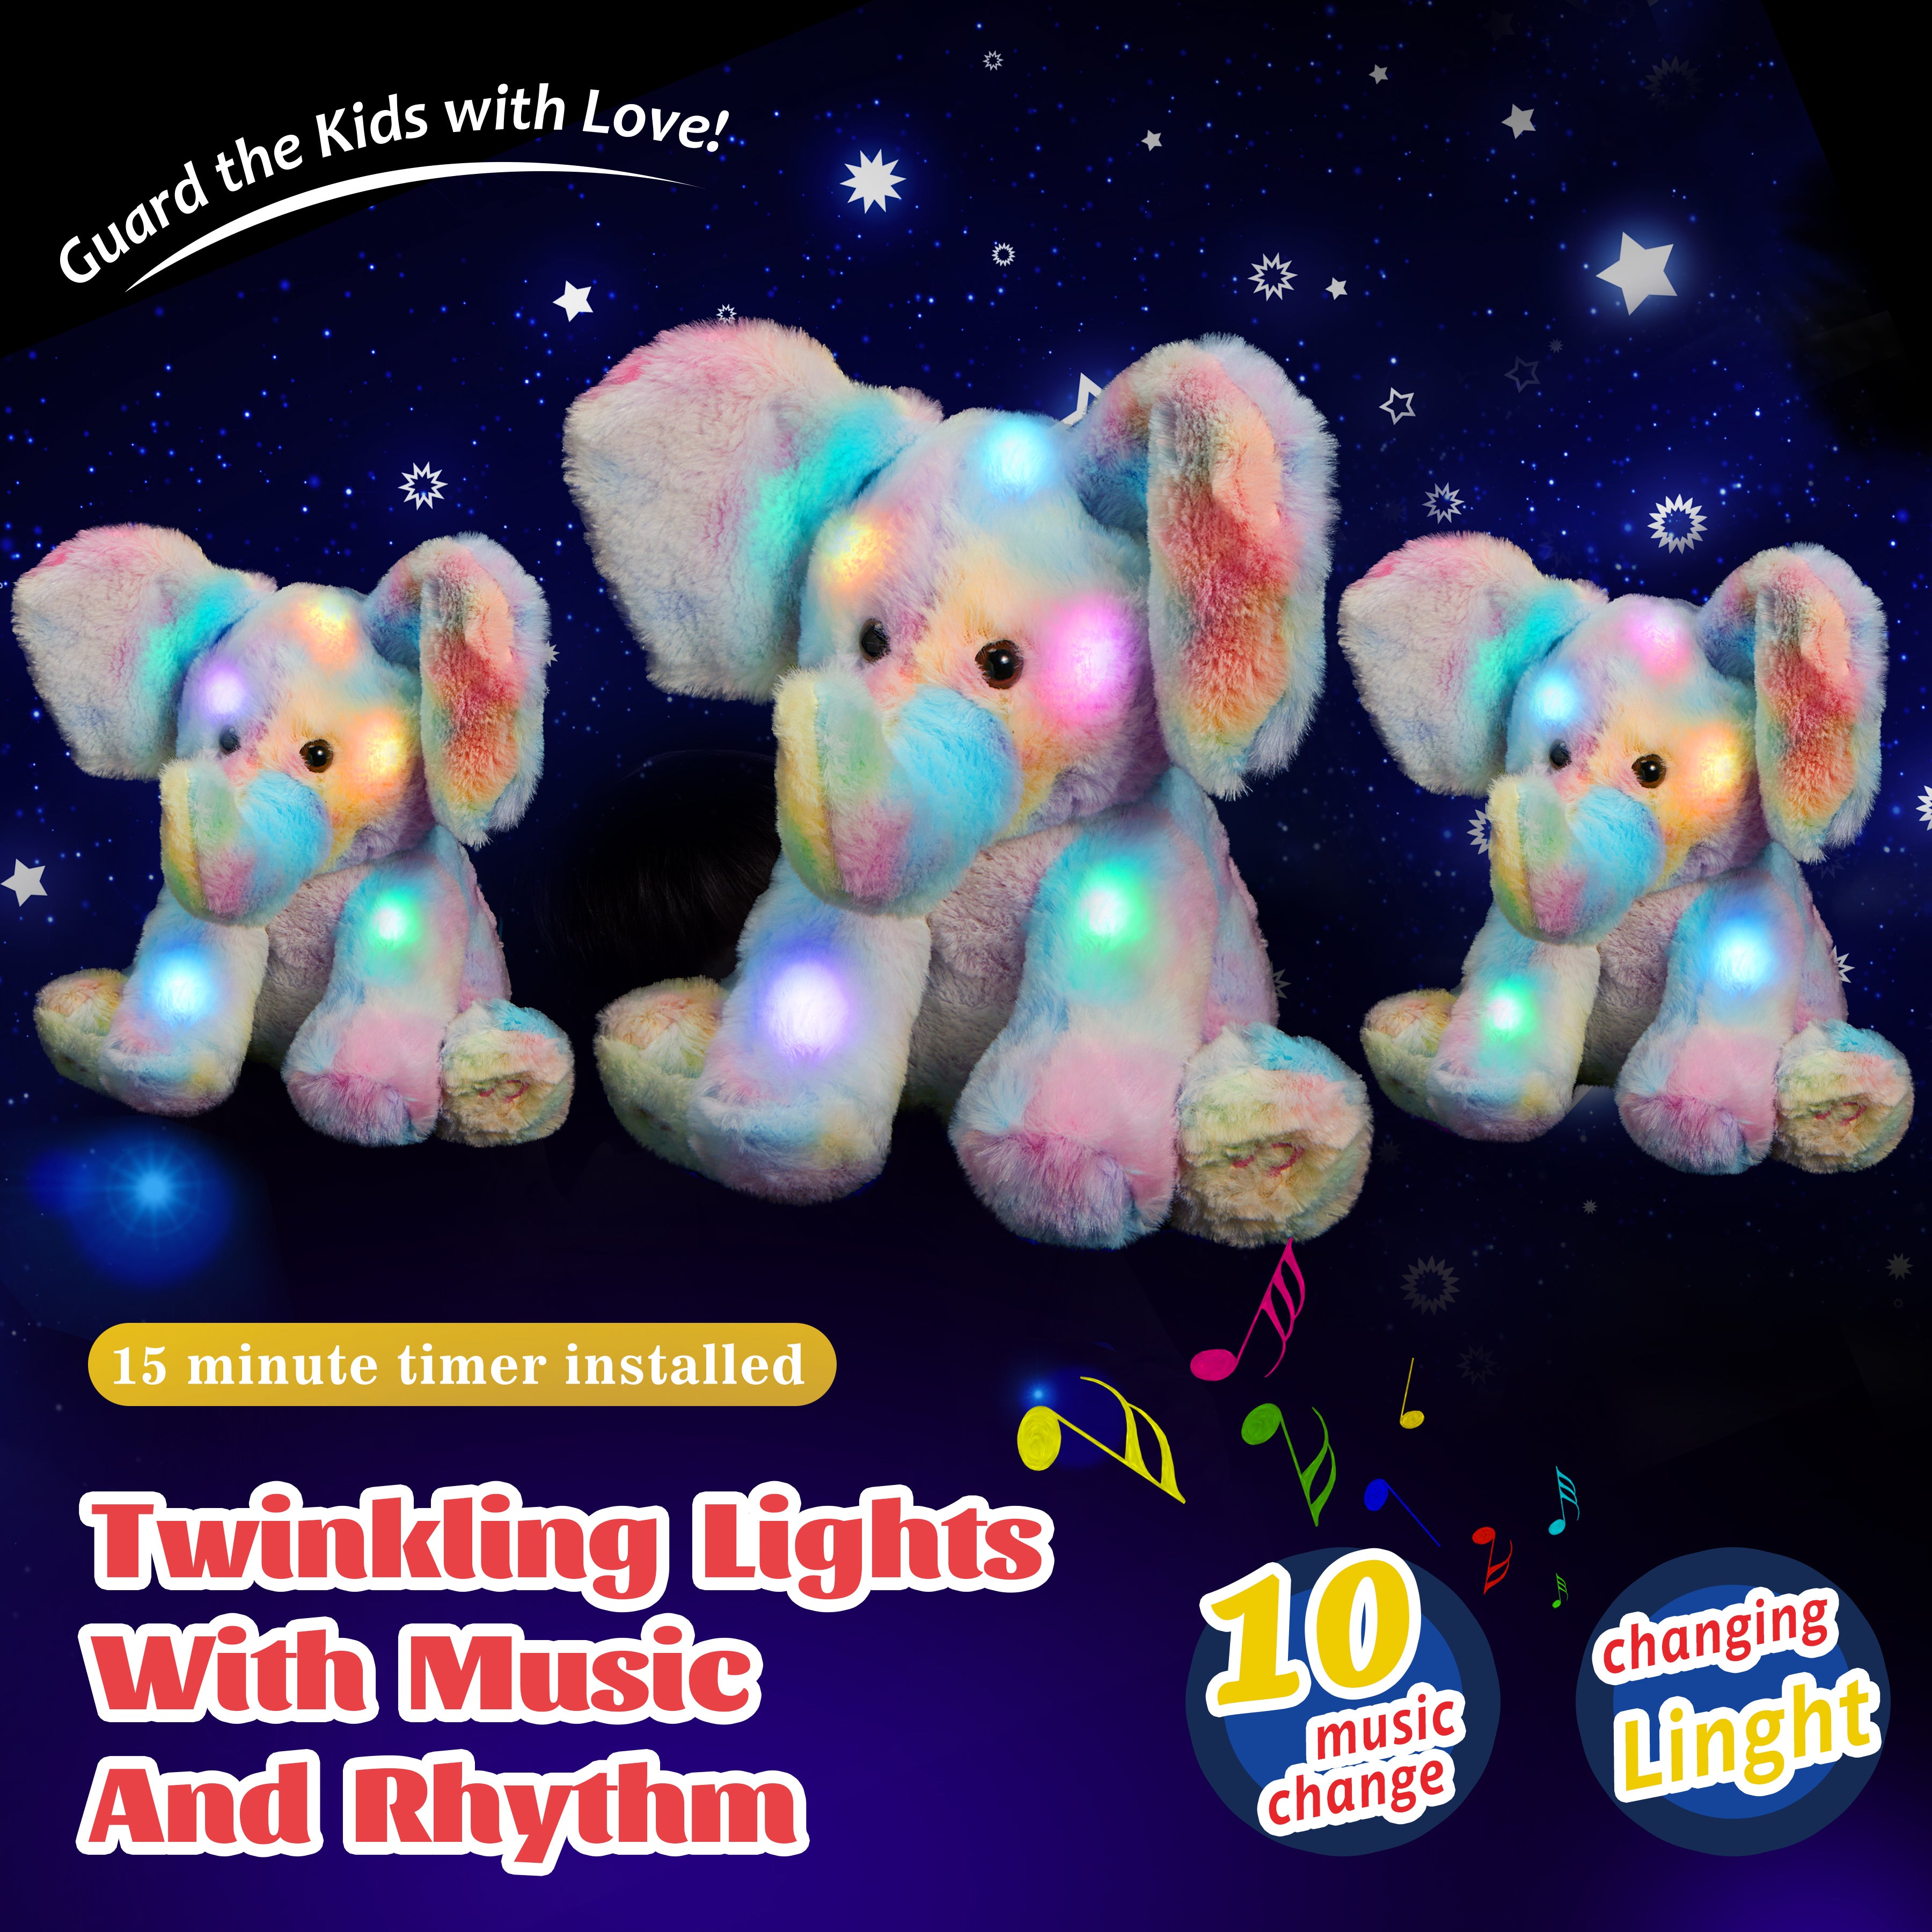 Glow Guards 12’’ Light up Musical Electric Elephant Rainbow Plush - Glow Guards